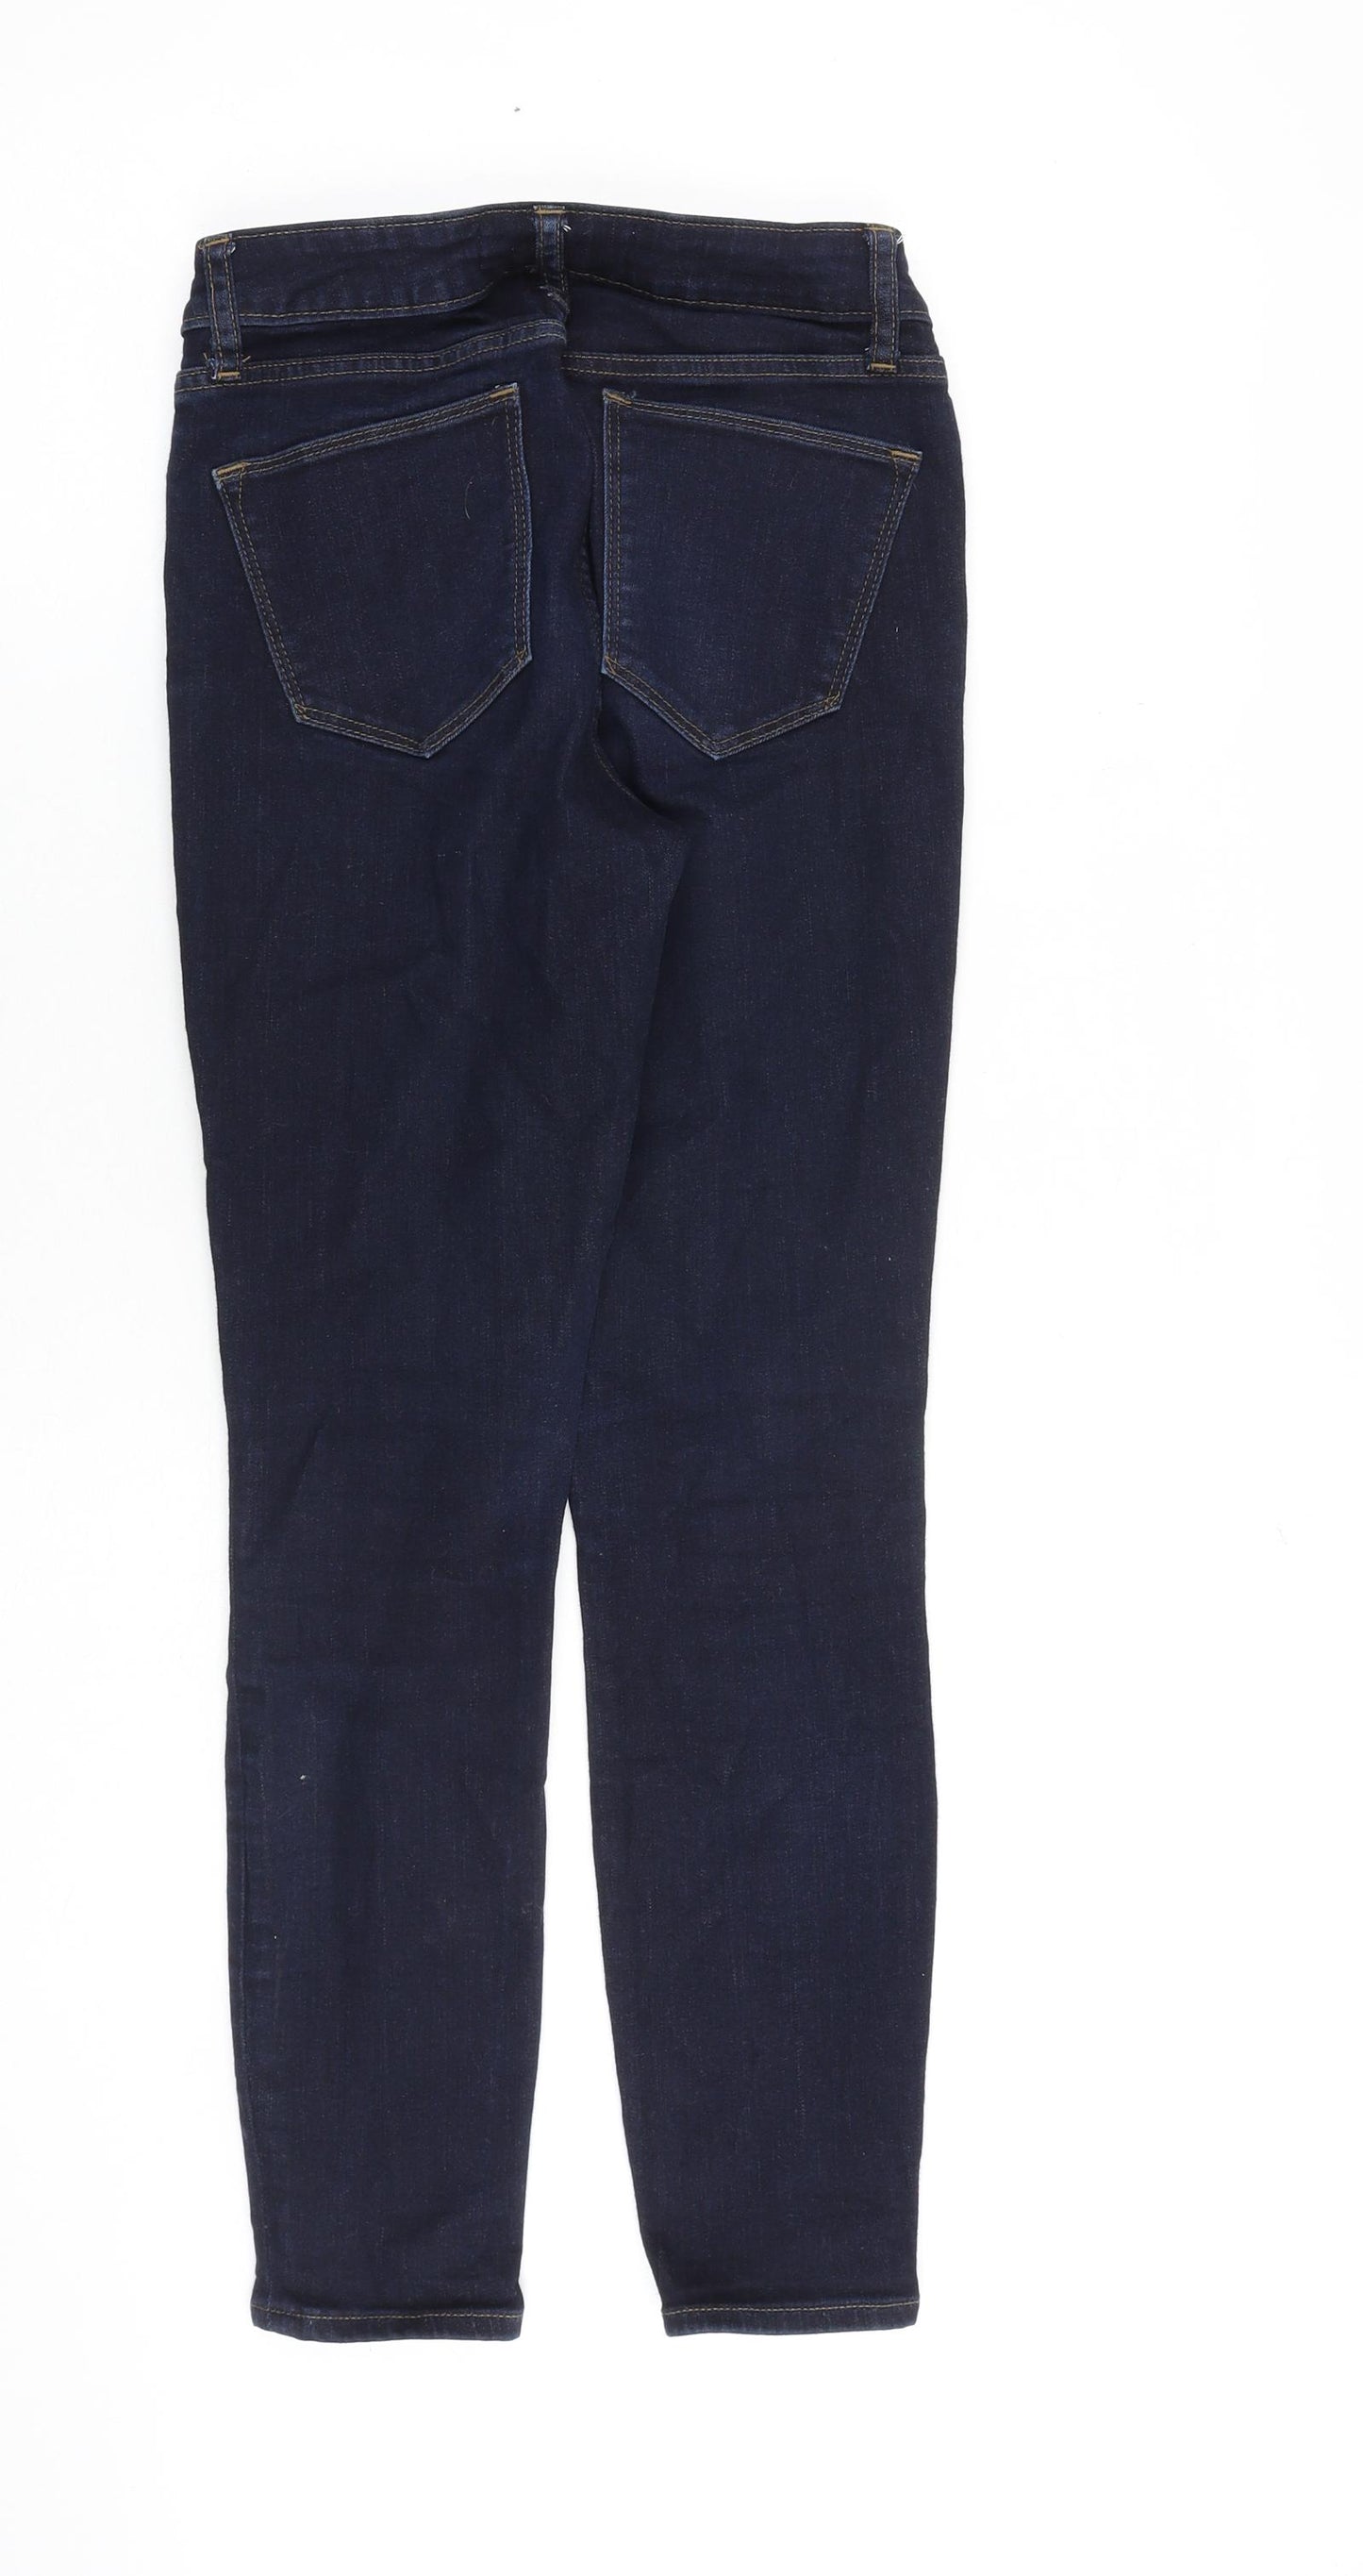 Gap Womens Blue Cotton Skinny Jeans Size 26 in L27 in Slim Zip